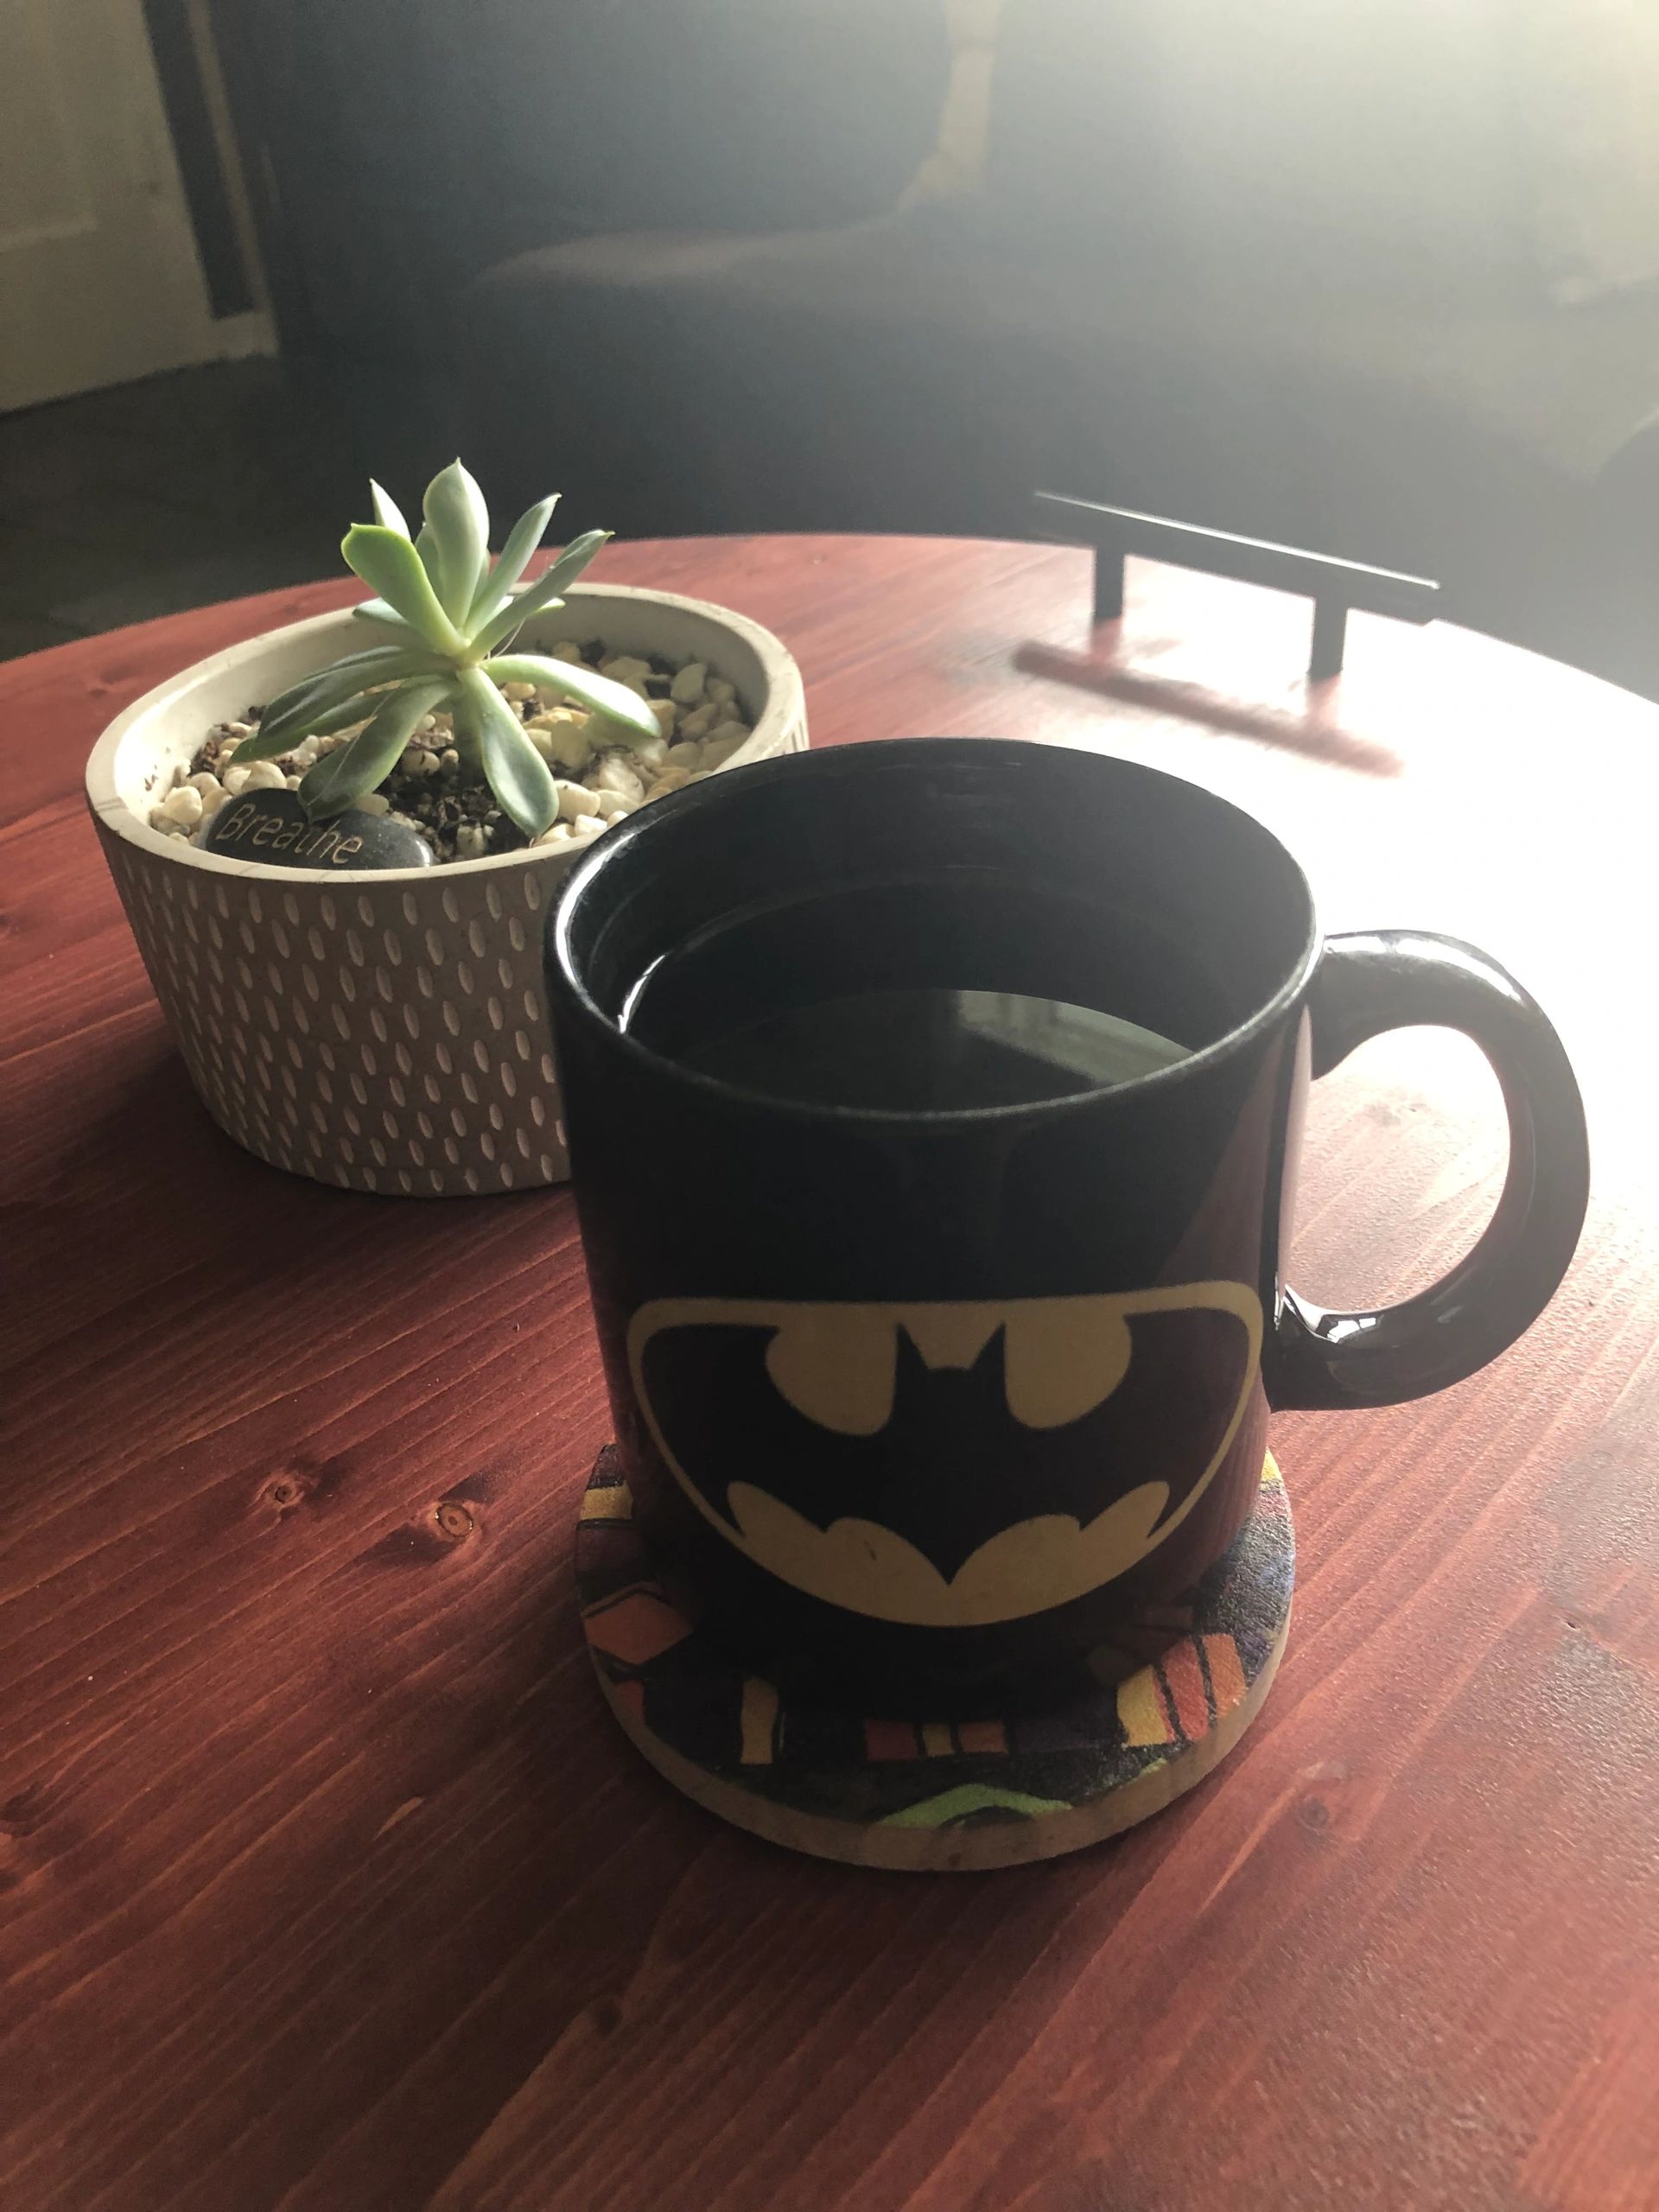 Of course Batman drinks coffee